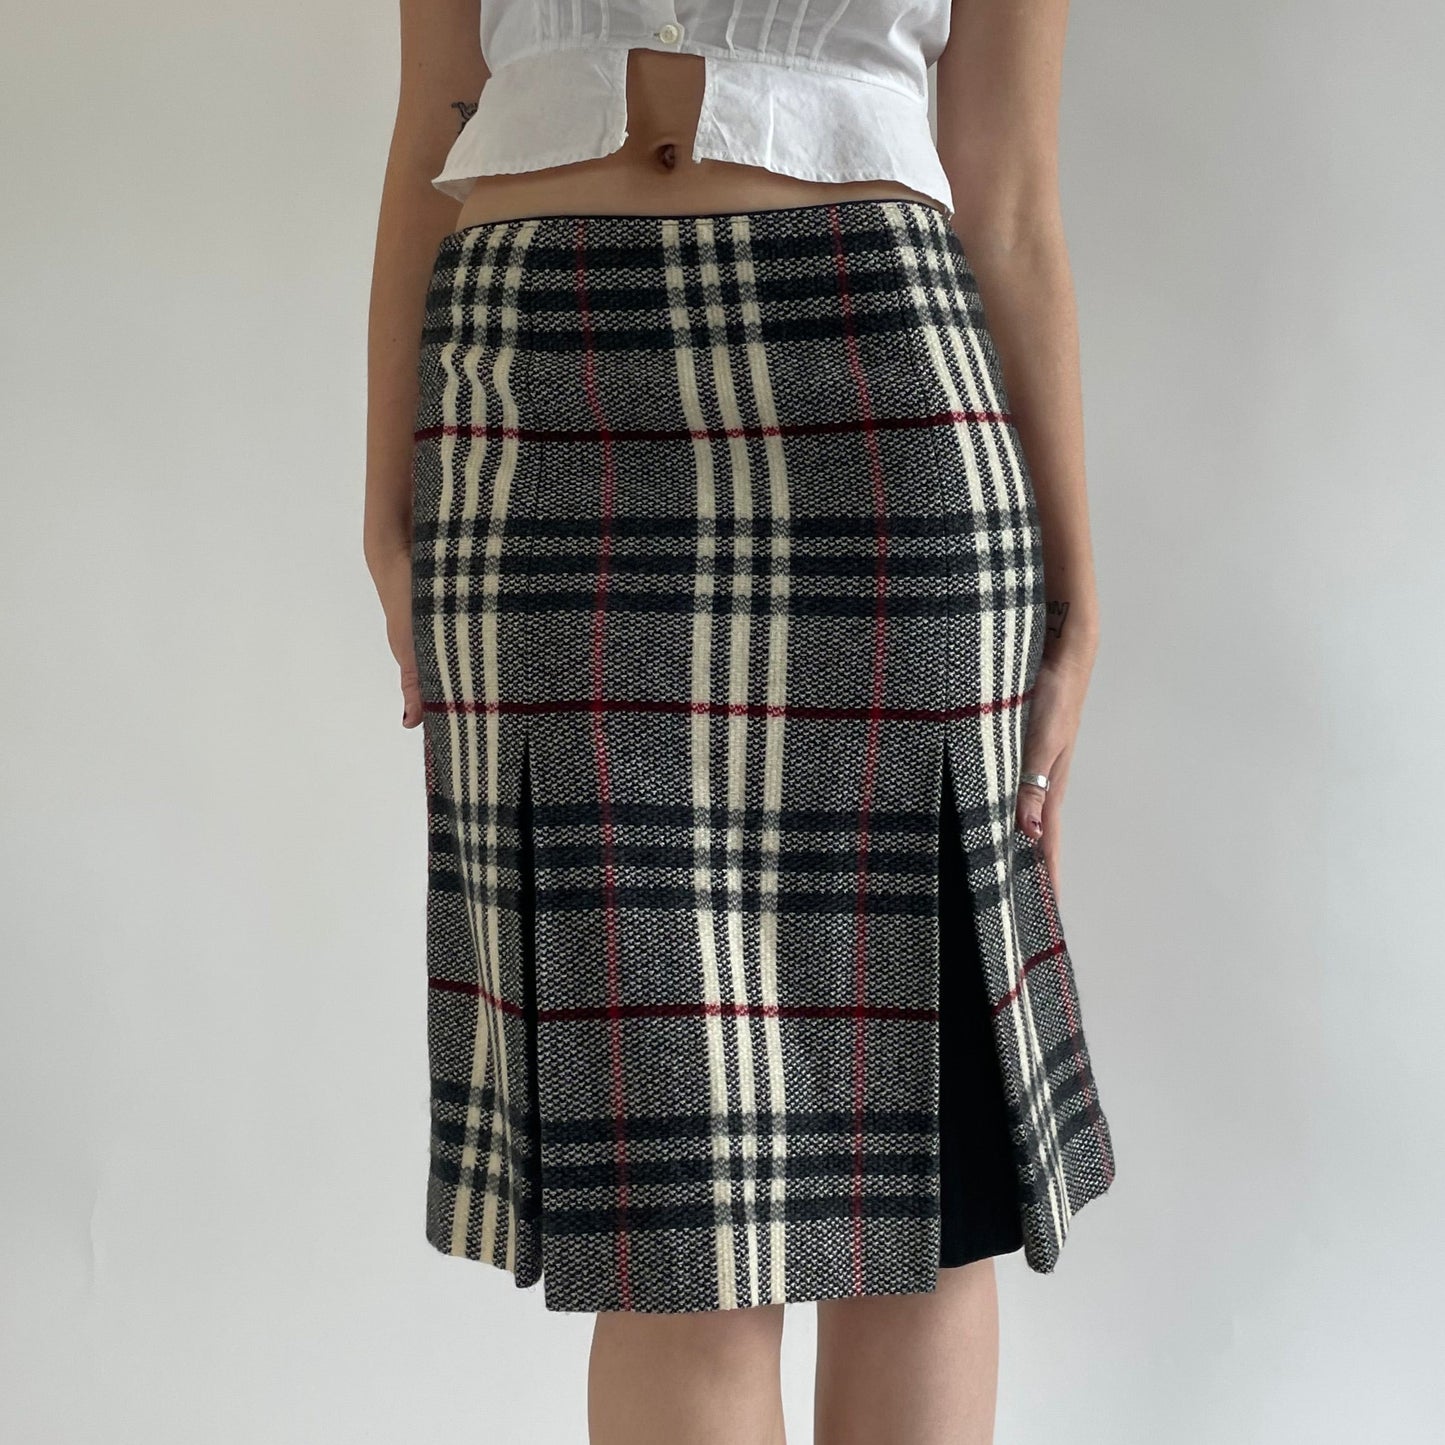 burberry plaid skirt